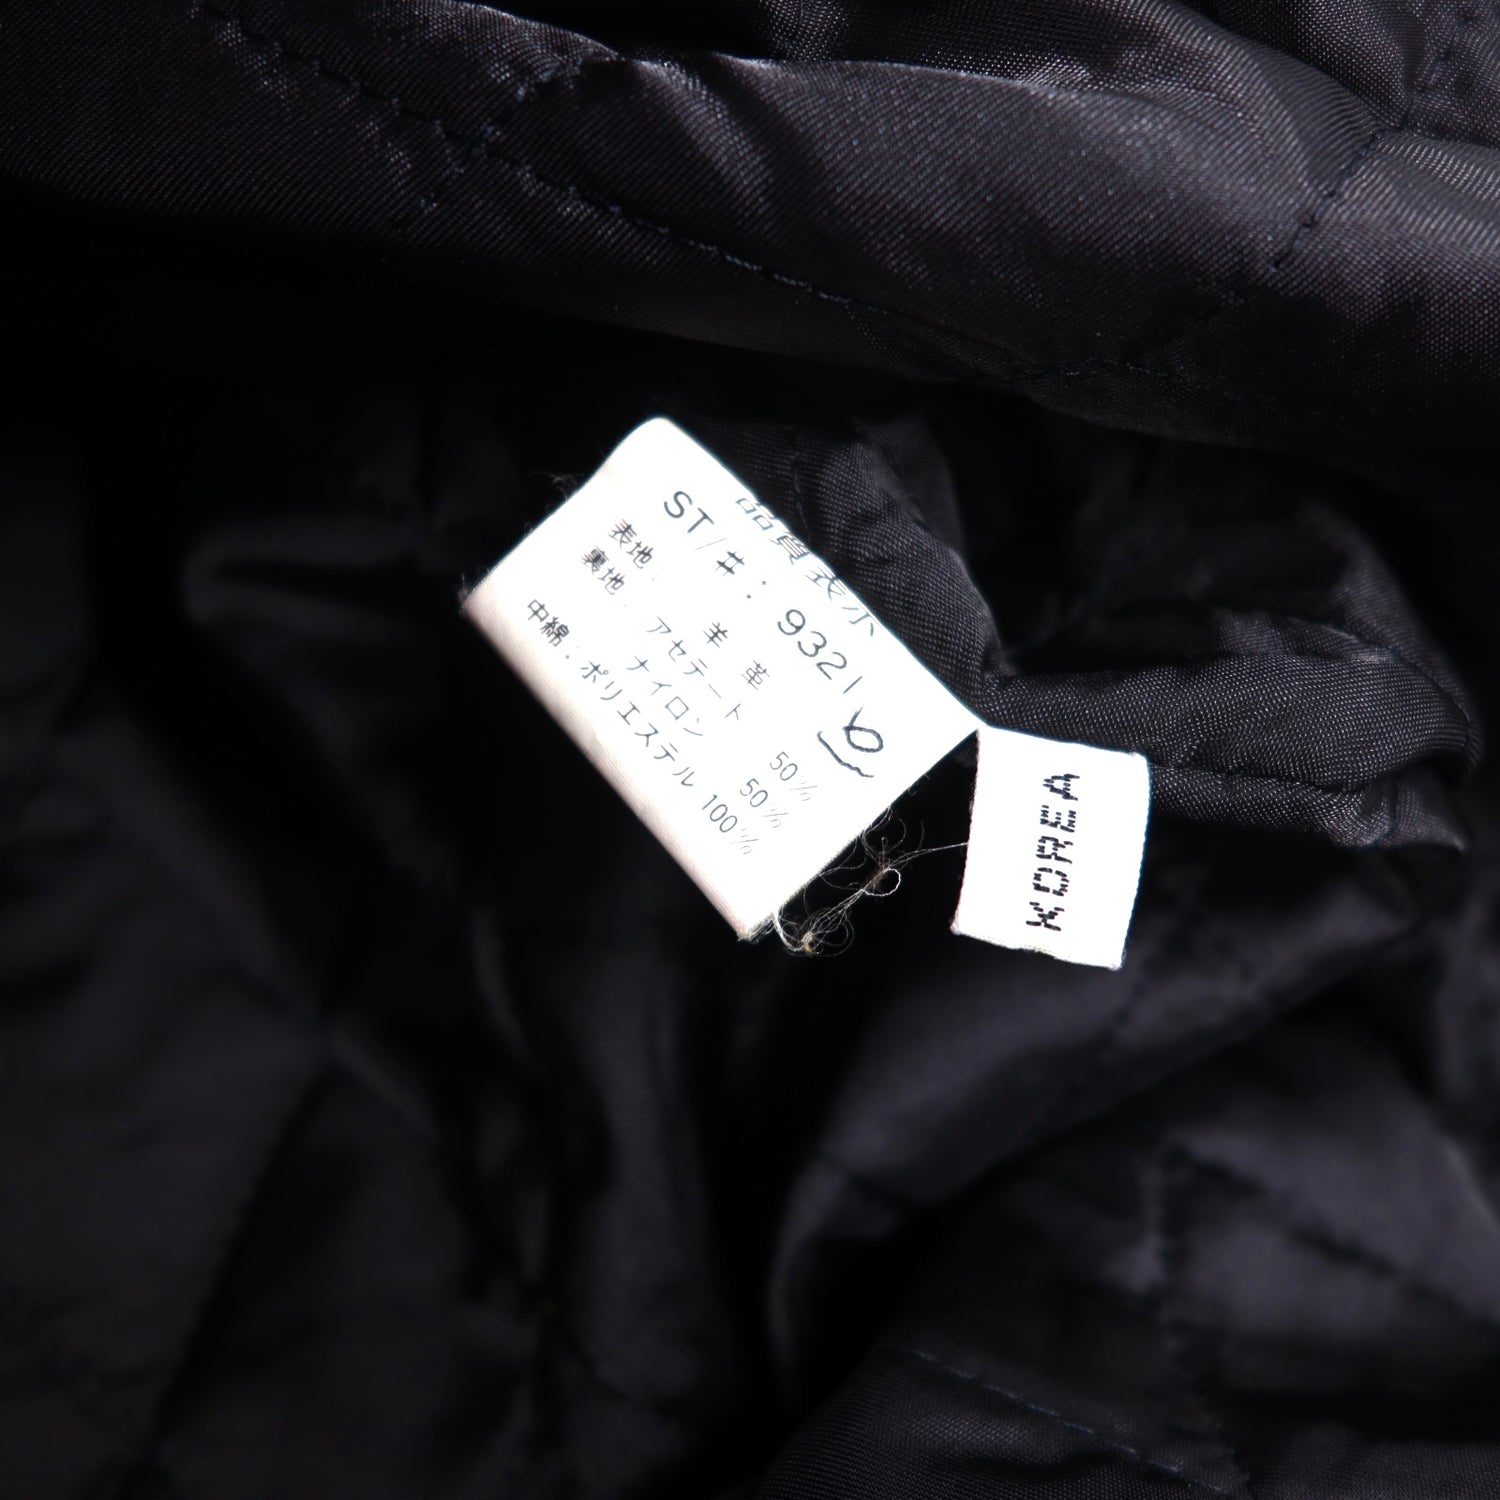 MTD KIDS New Basic Leather Coat L Black Lamb Leather Quilting 